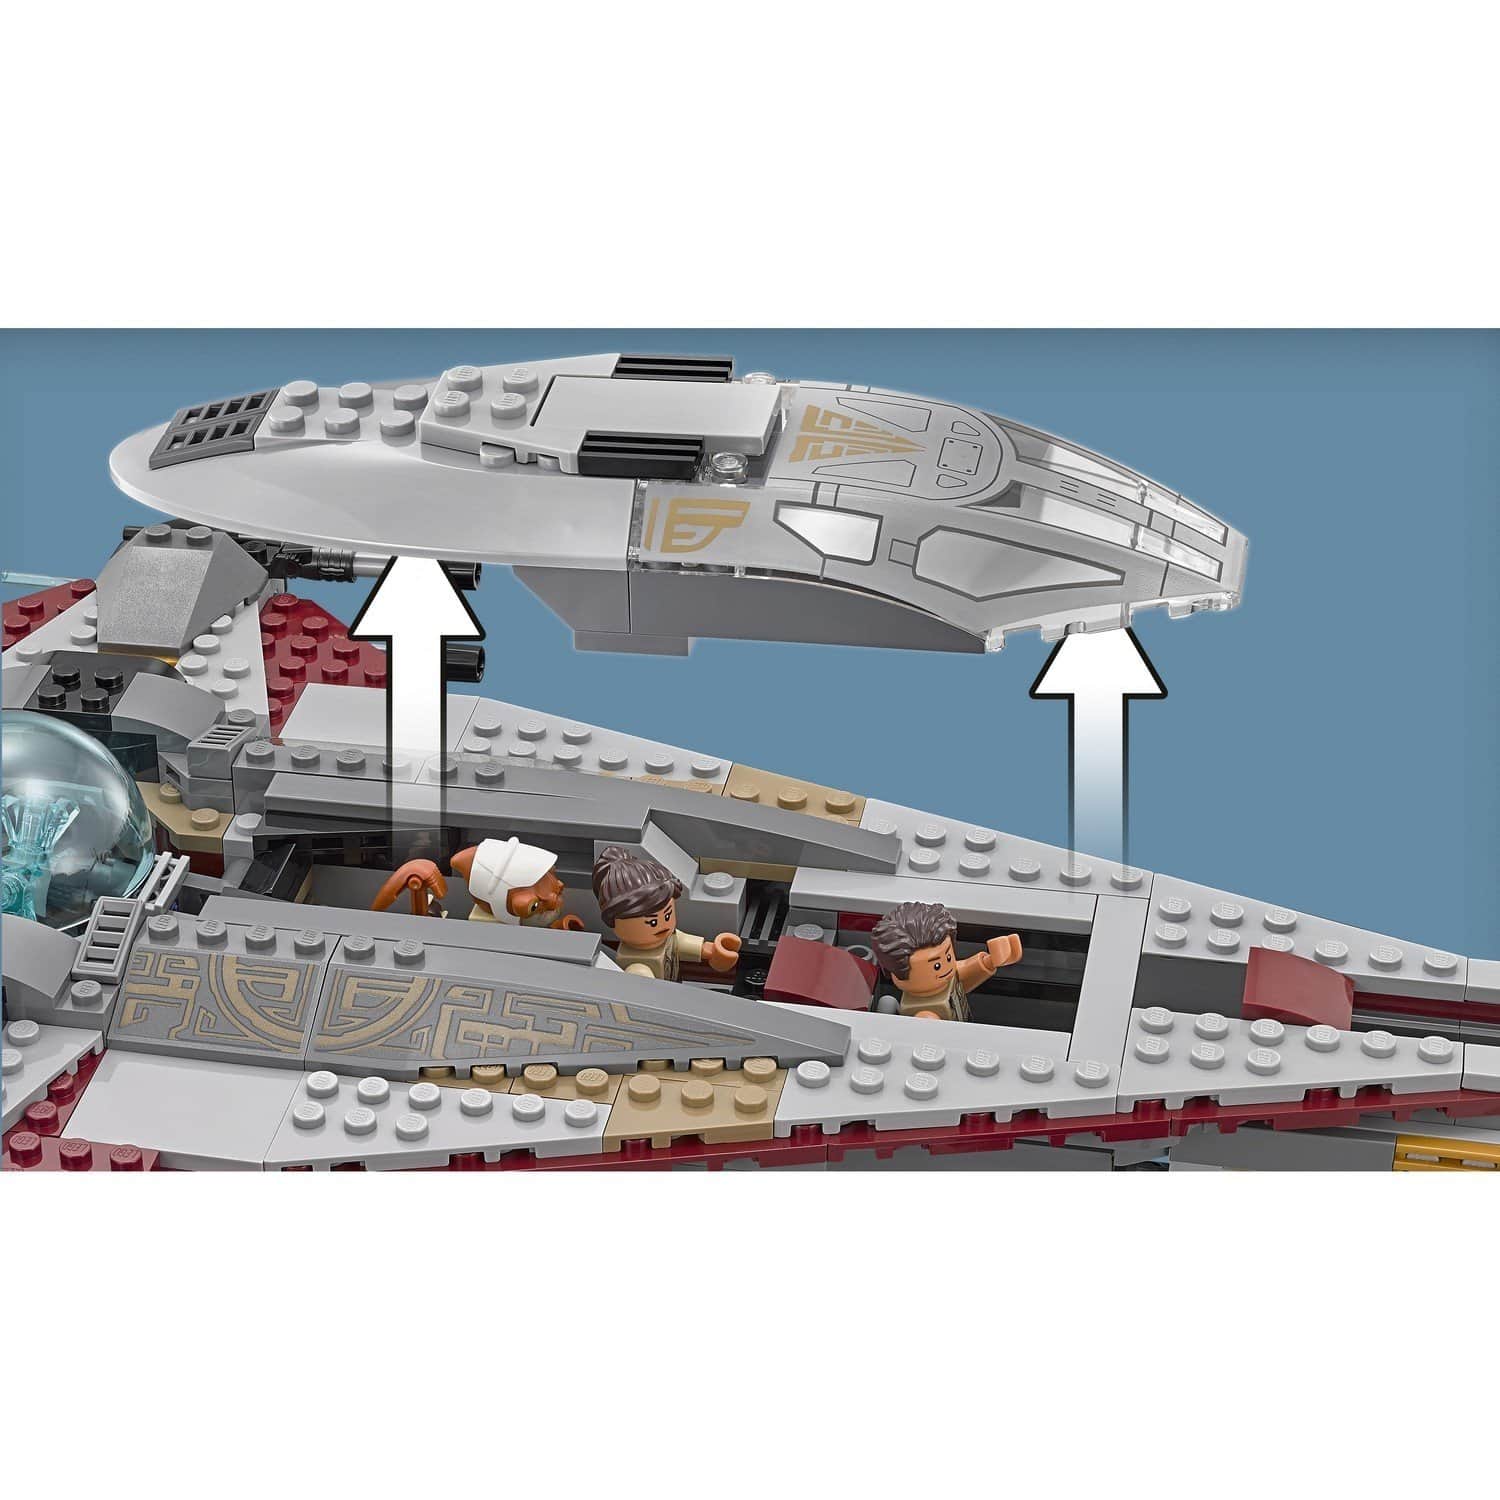 Конструктор LEGO Star Wars 75186 Стрела